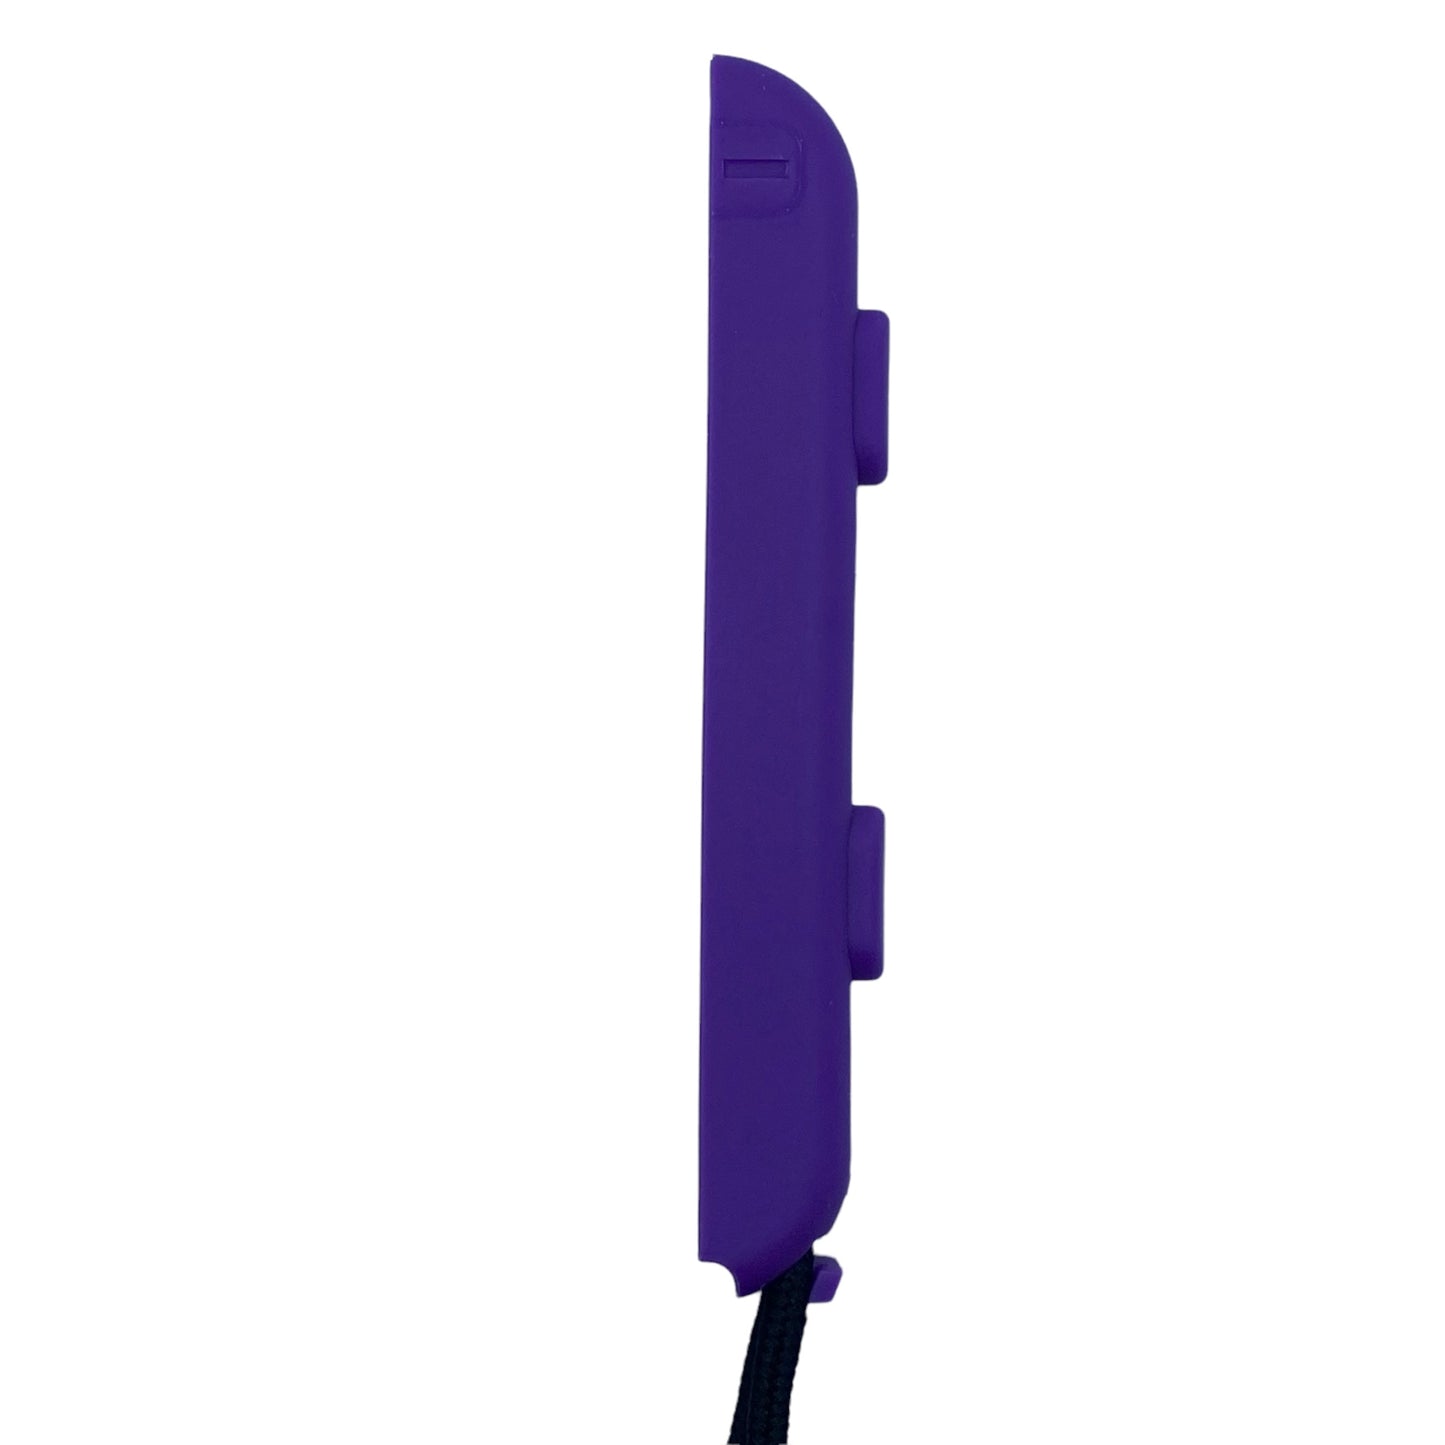 JenDore Purple Joy-con Wrist Strap Band for the Nintendo Switch